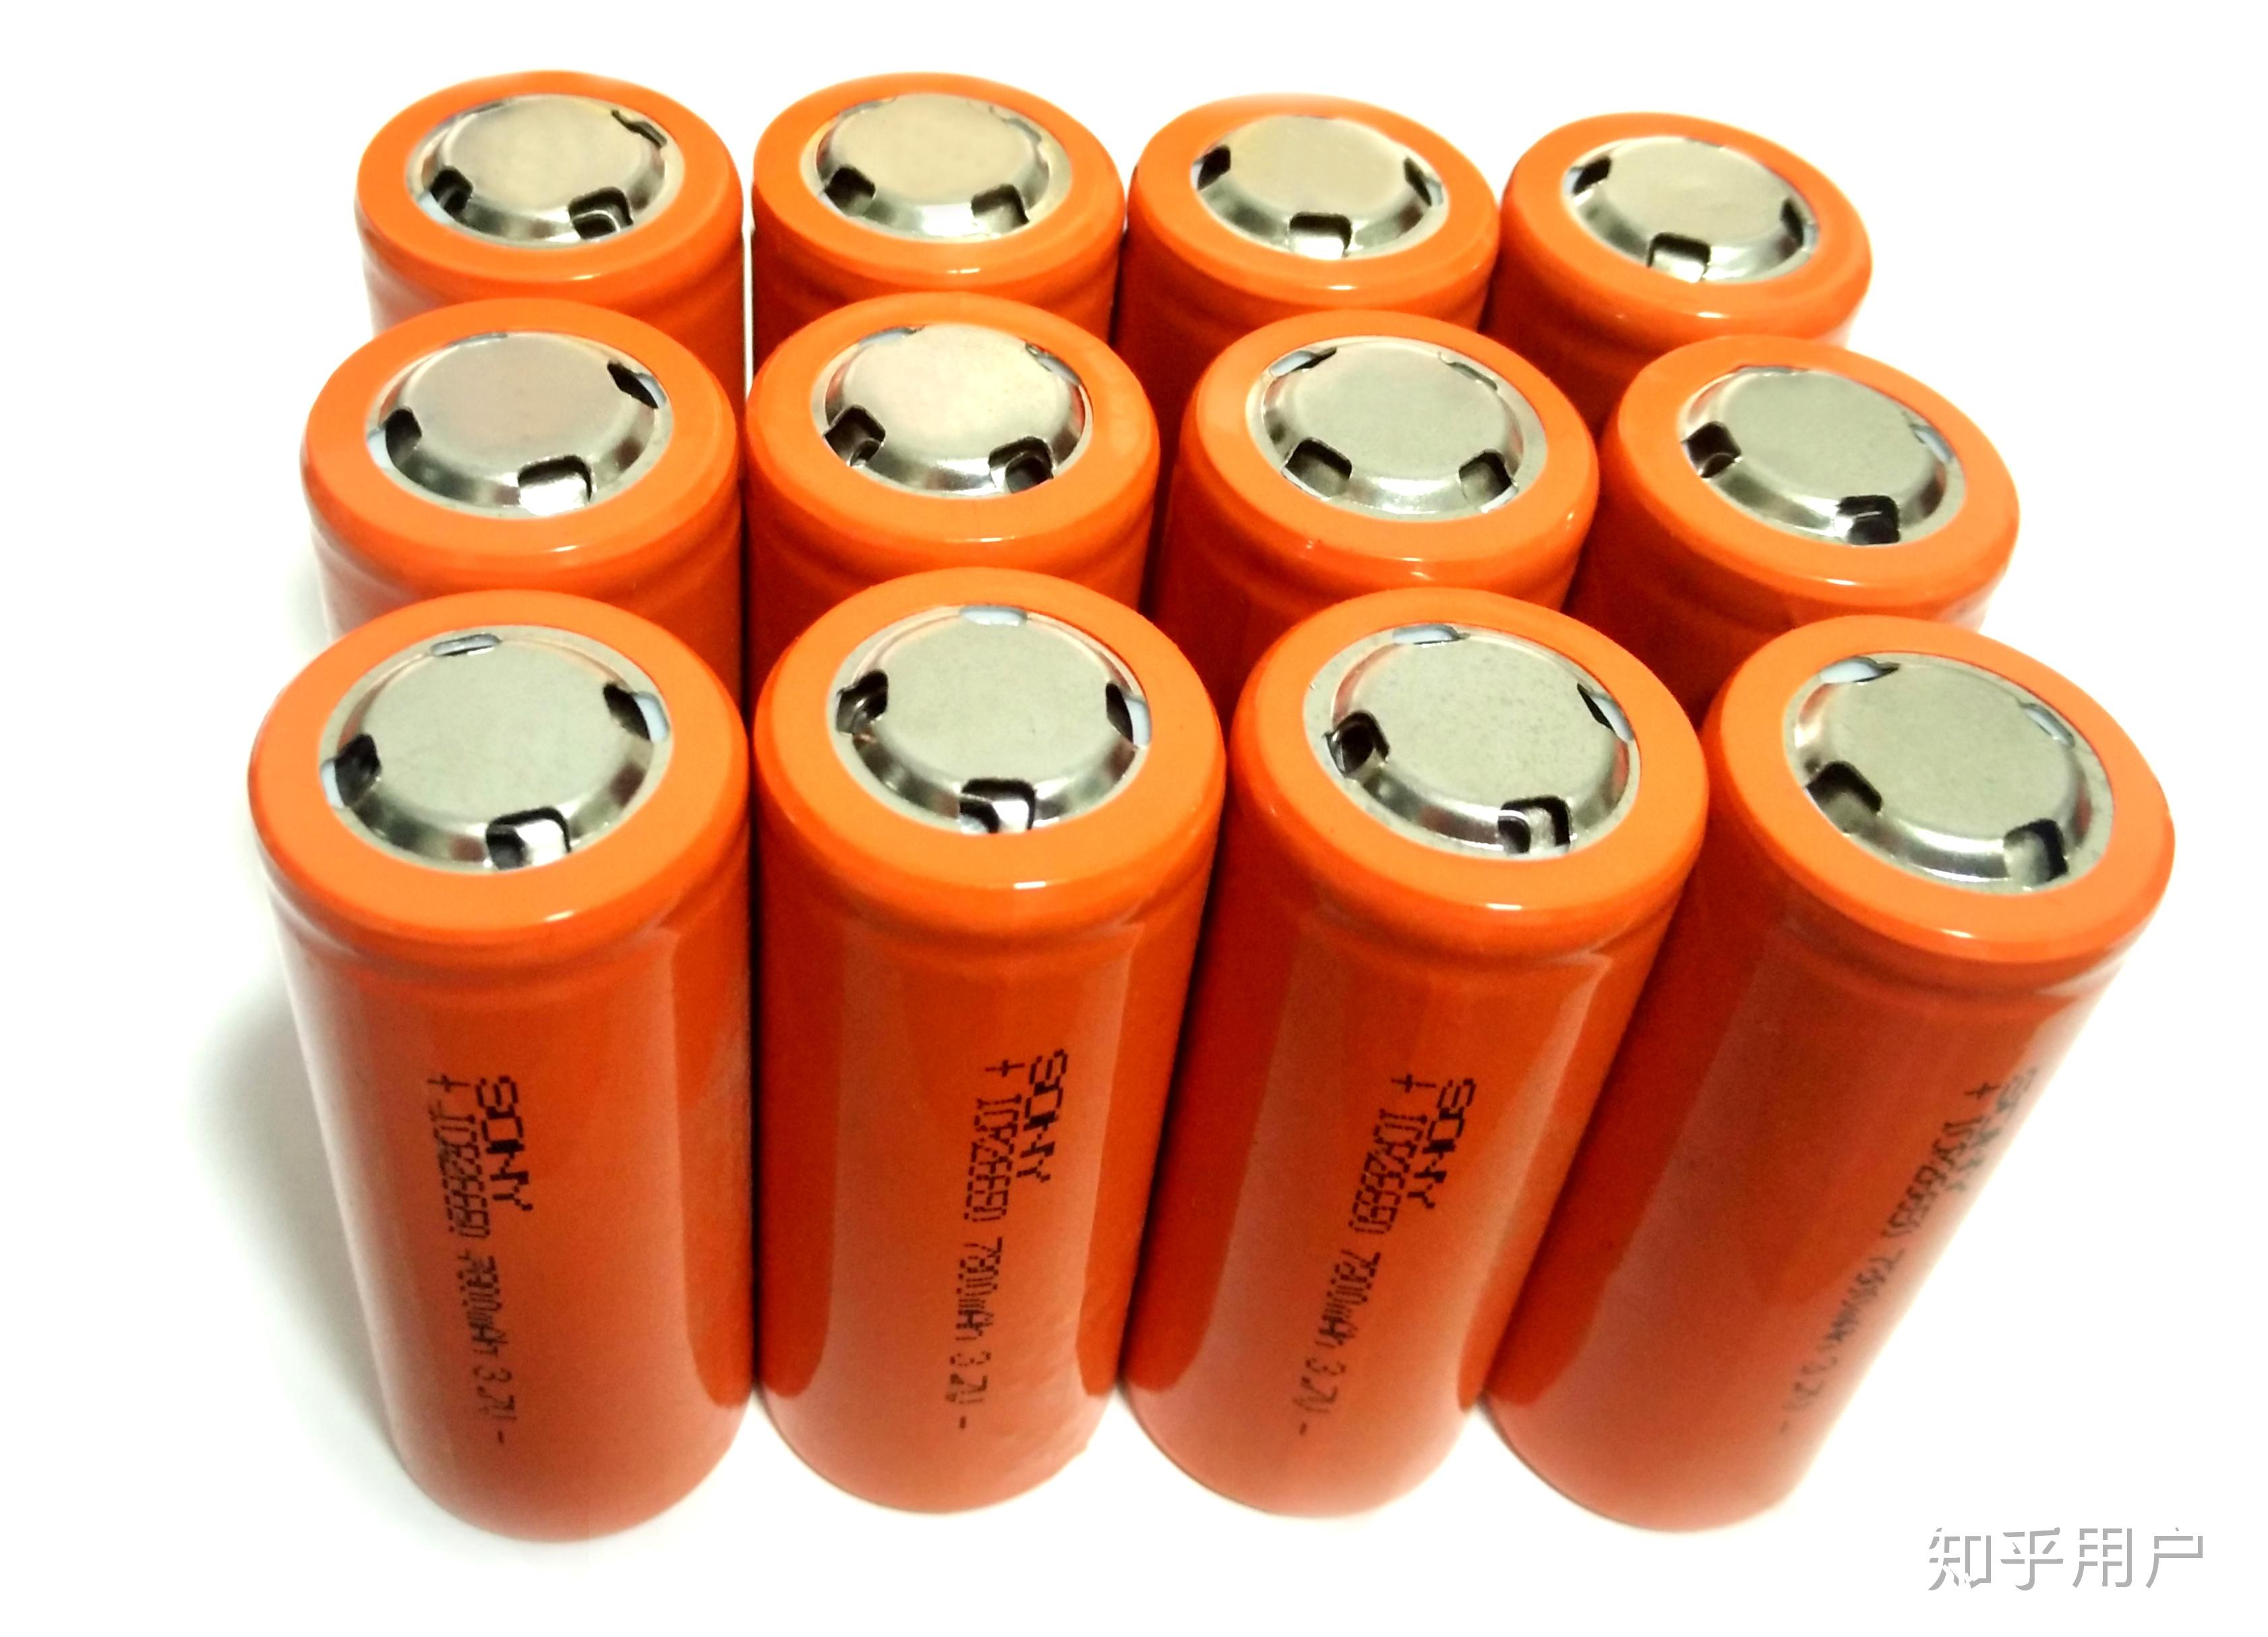 Batteries 库存图片. 图片 包括有 用品, 金子, 加强, 能源, 伏特, 电池, 橙色, 金属 - 19488039